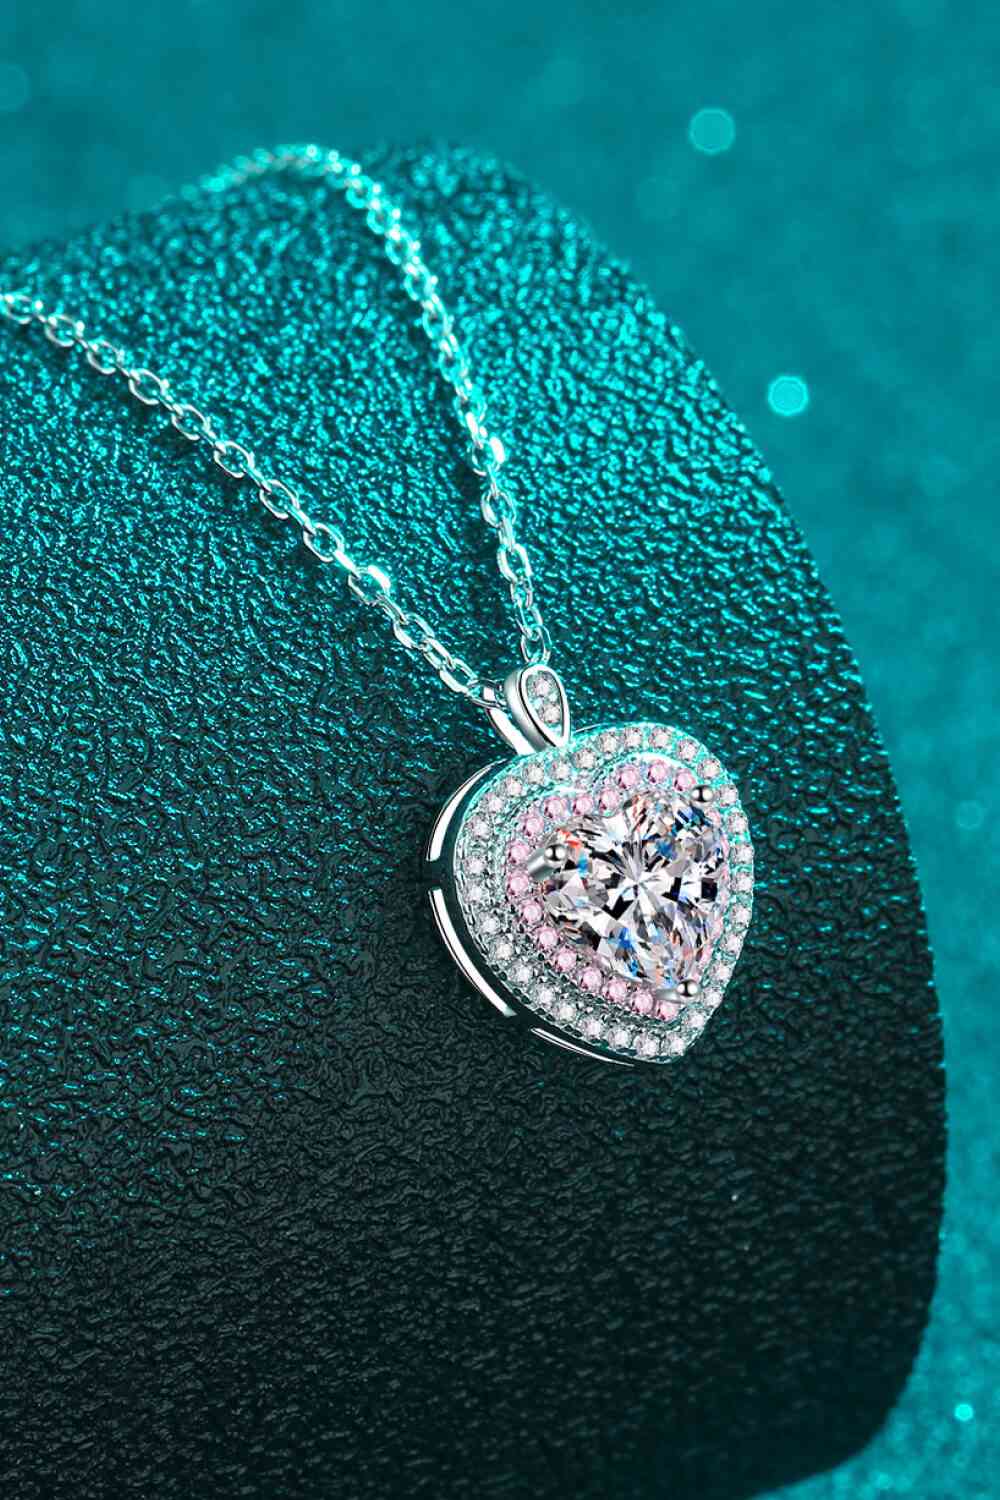 Moissanite 925 Sterling Silver 1 Carat Heart Pendant Necklace